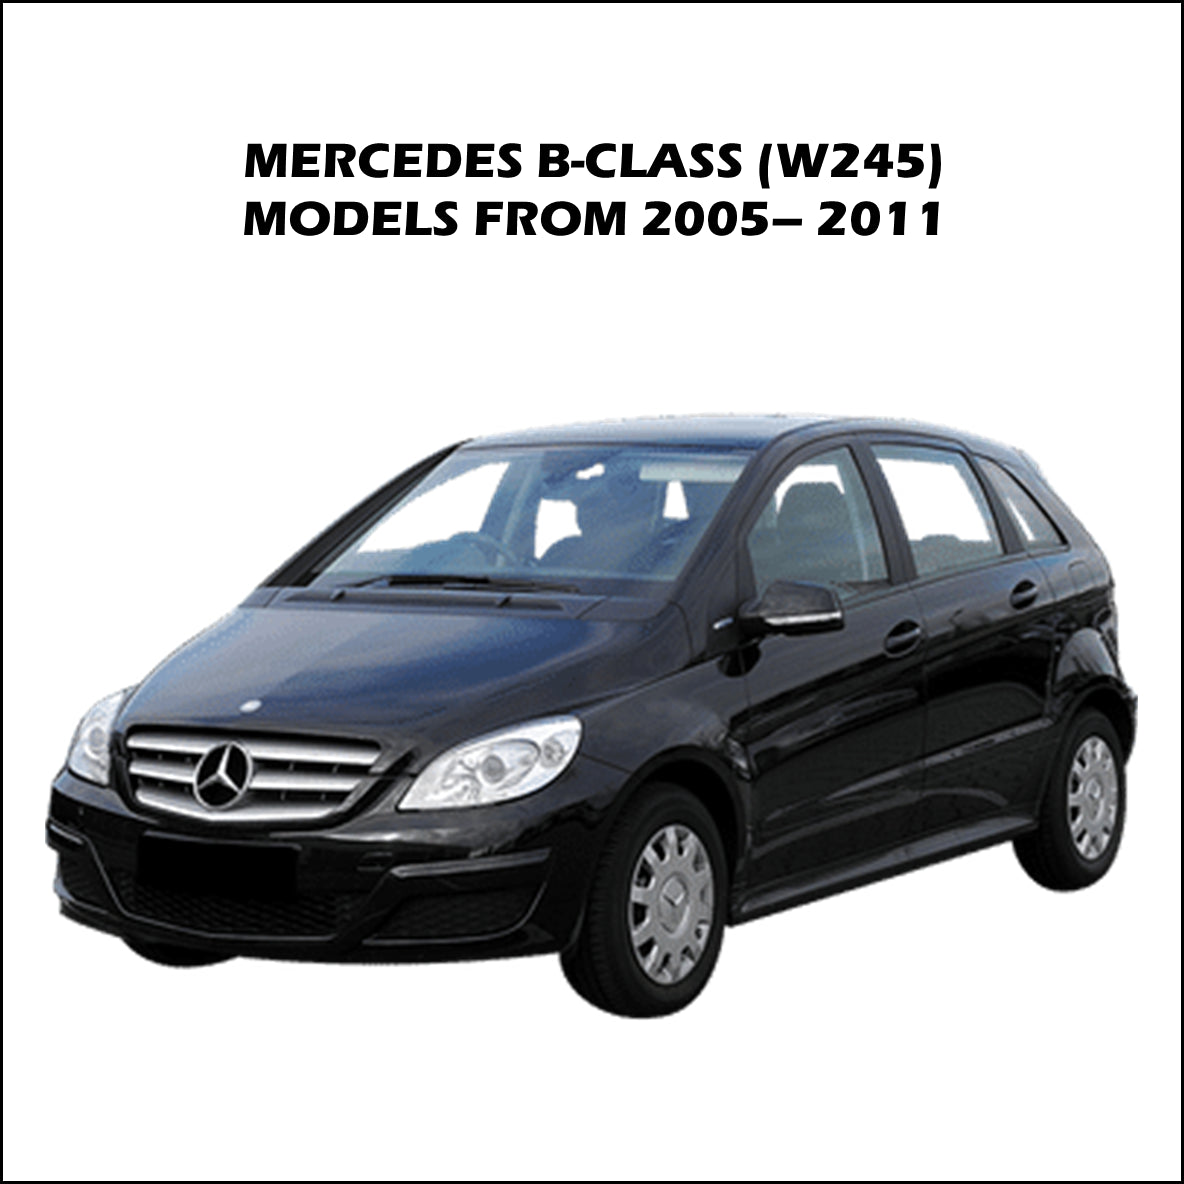  2005 Mercedes-Benz B-Klasse [W245] in Unknown, 2011